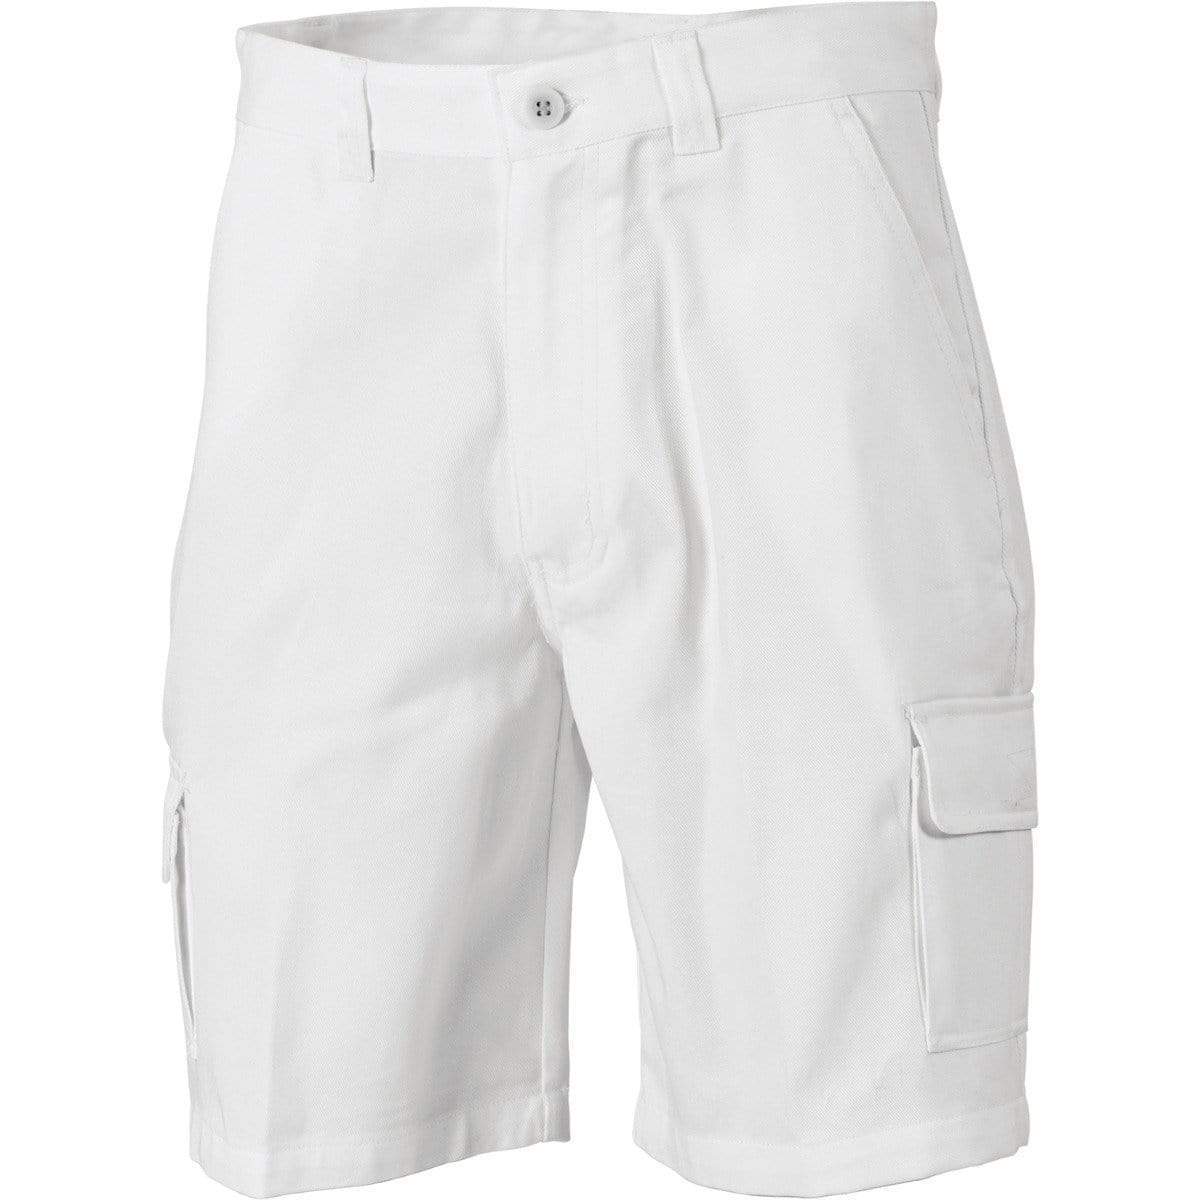 Dnc Workwear Cotton Drill Cargo Shorts - 3302 Work Wear DNC Workwear White 72R 